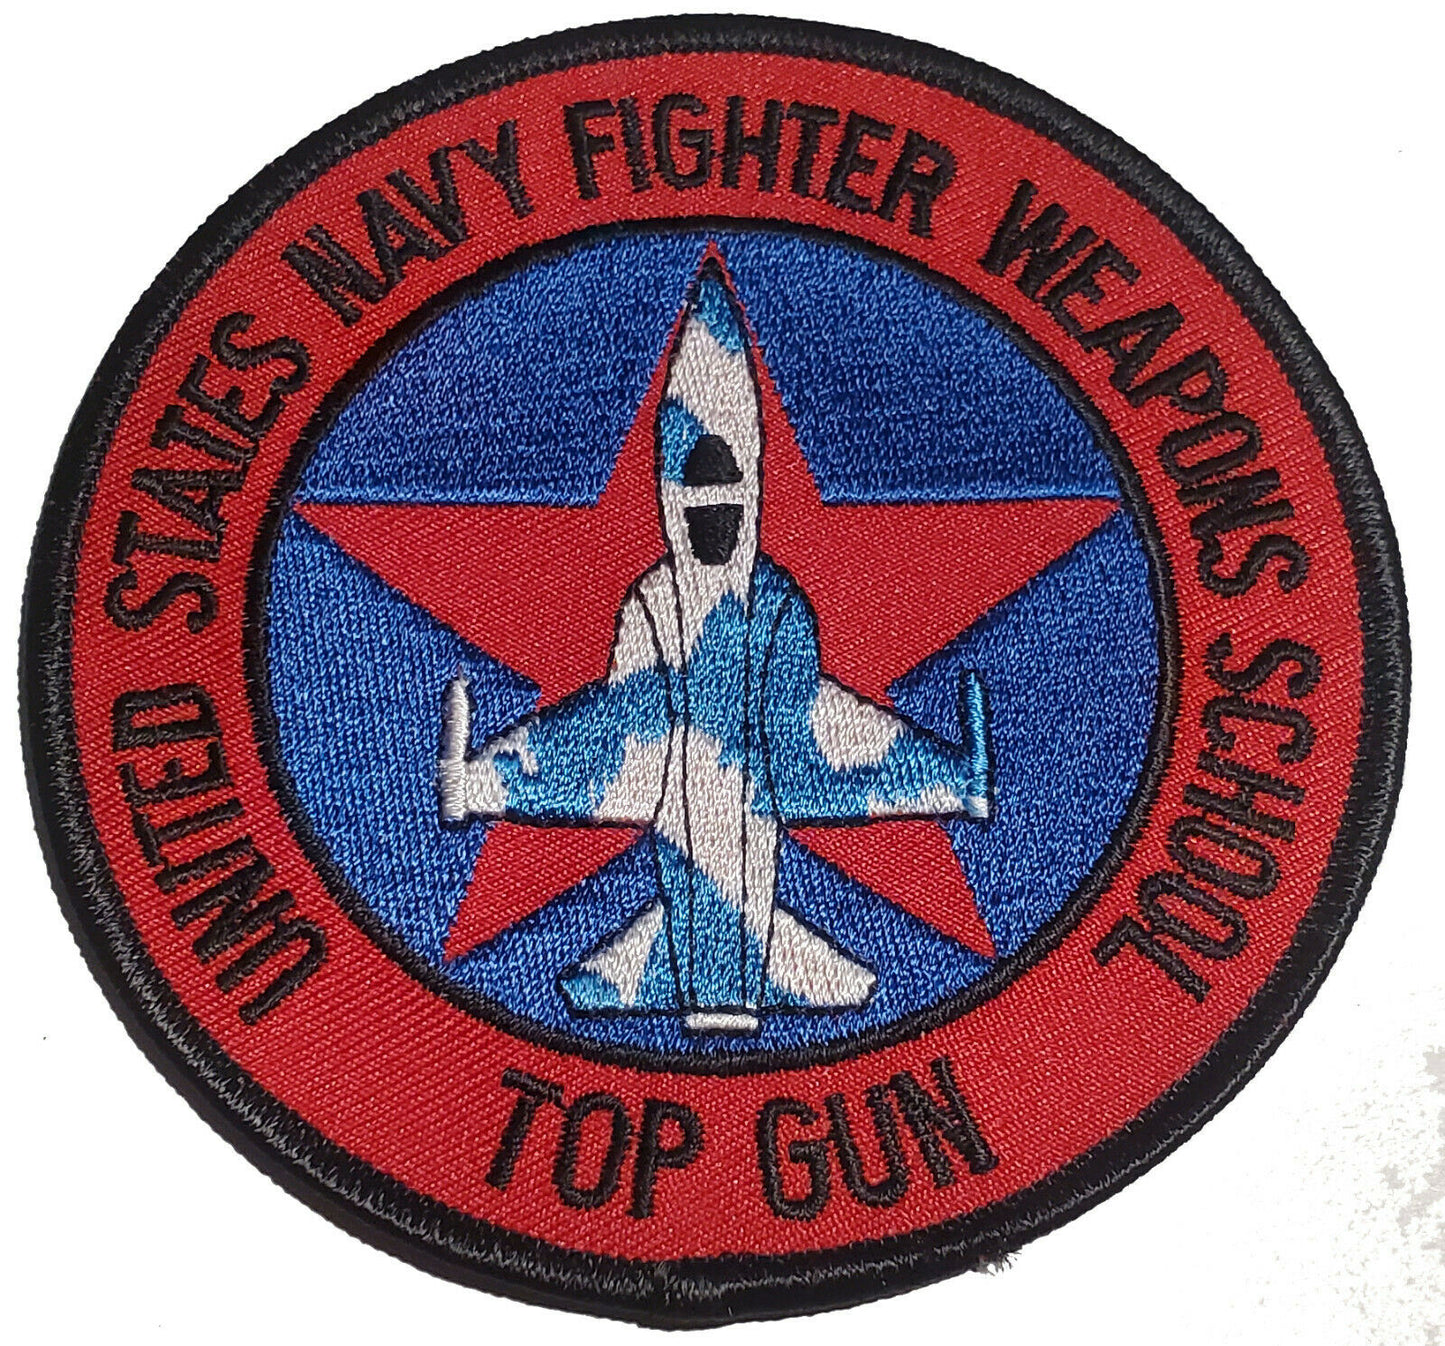 US Navy Top Gun Aviator Patch USN Fighter Pilot Weapons School